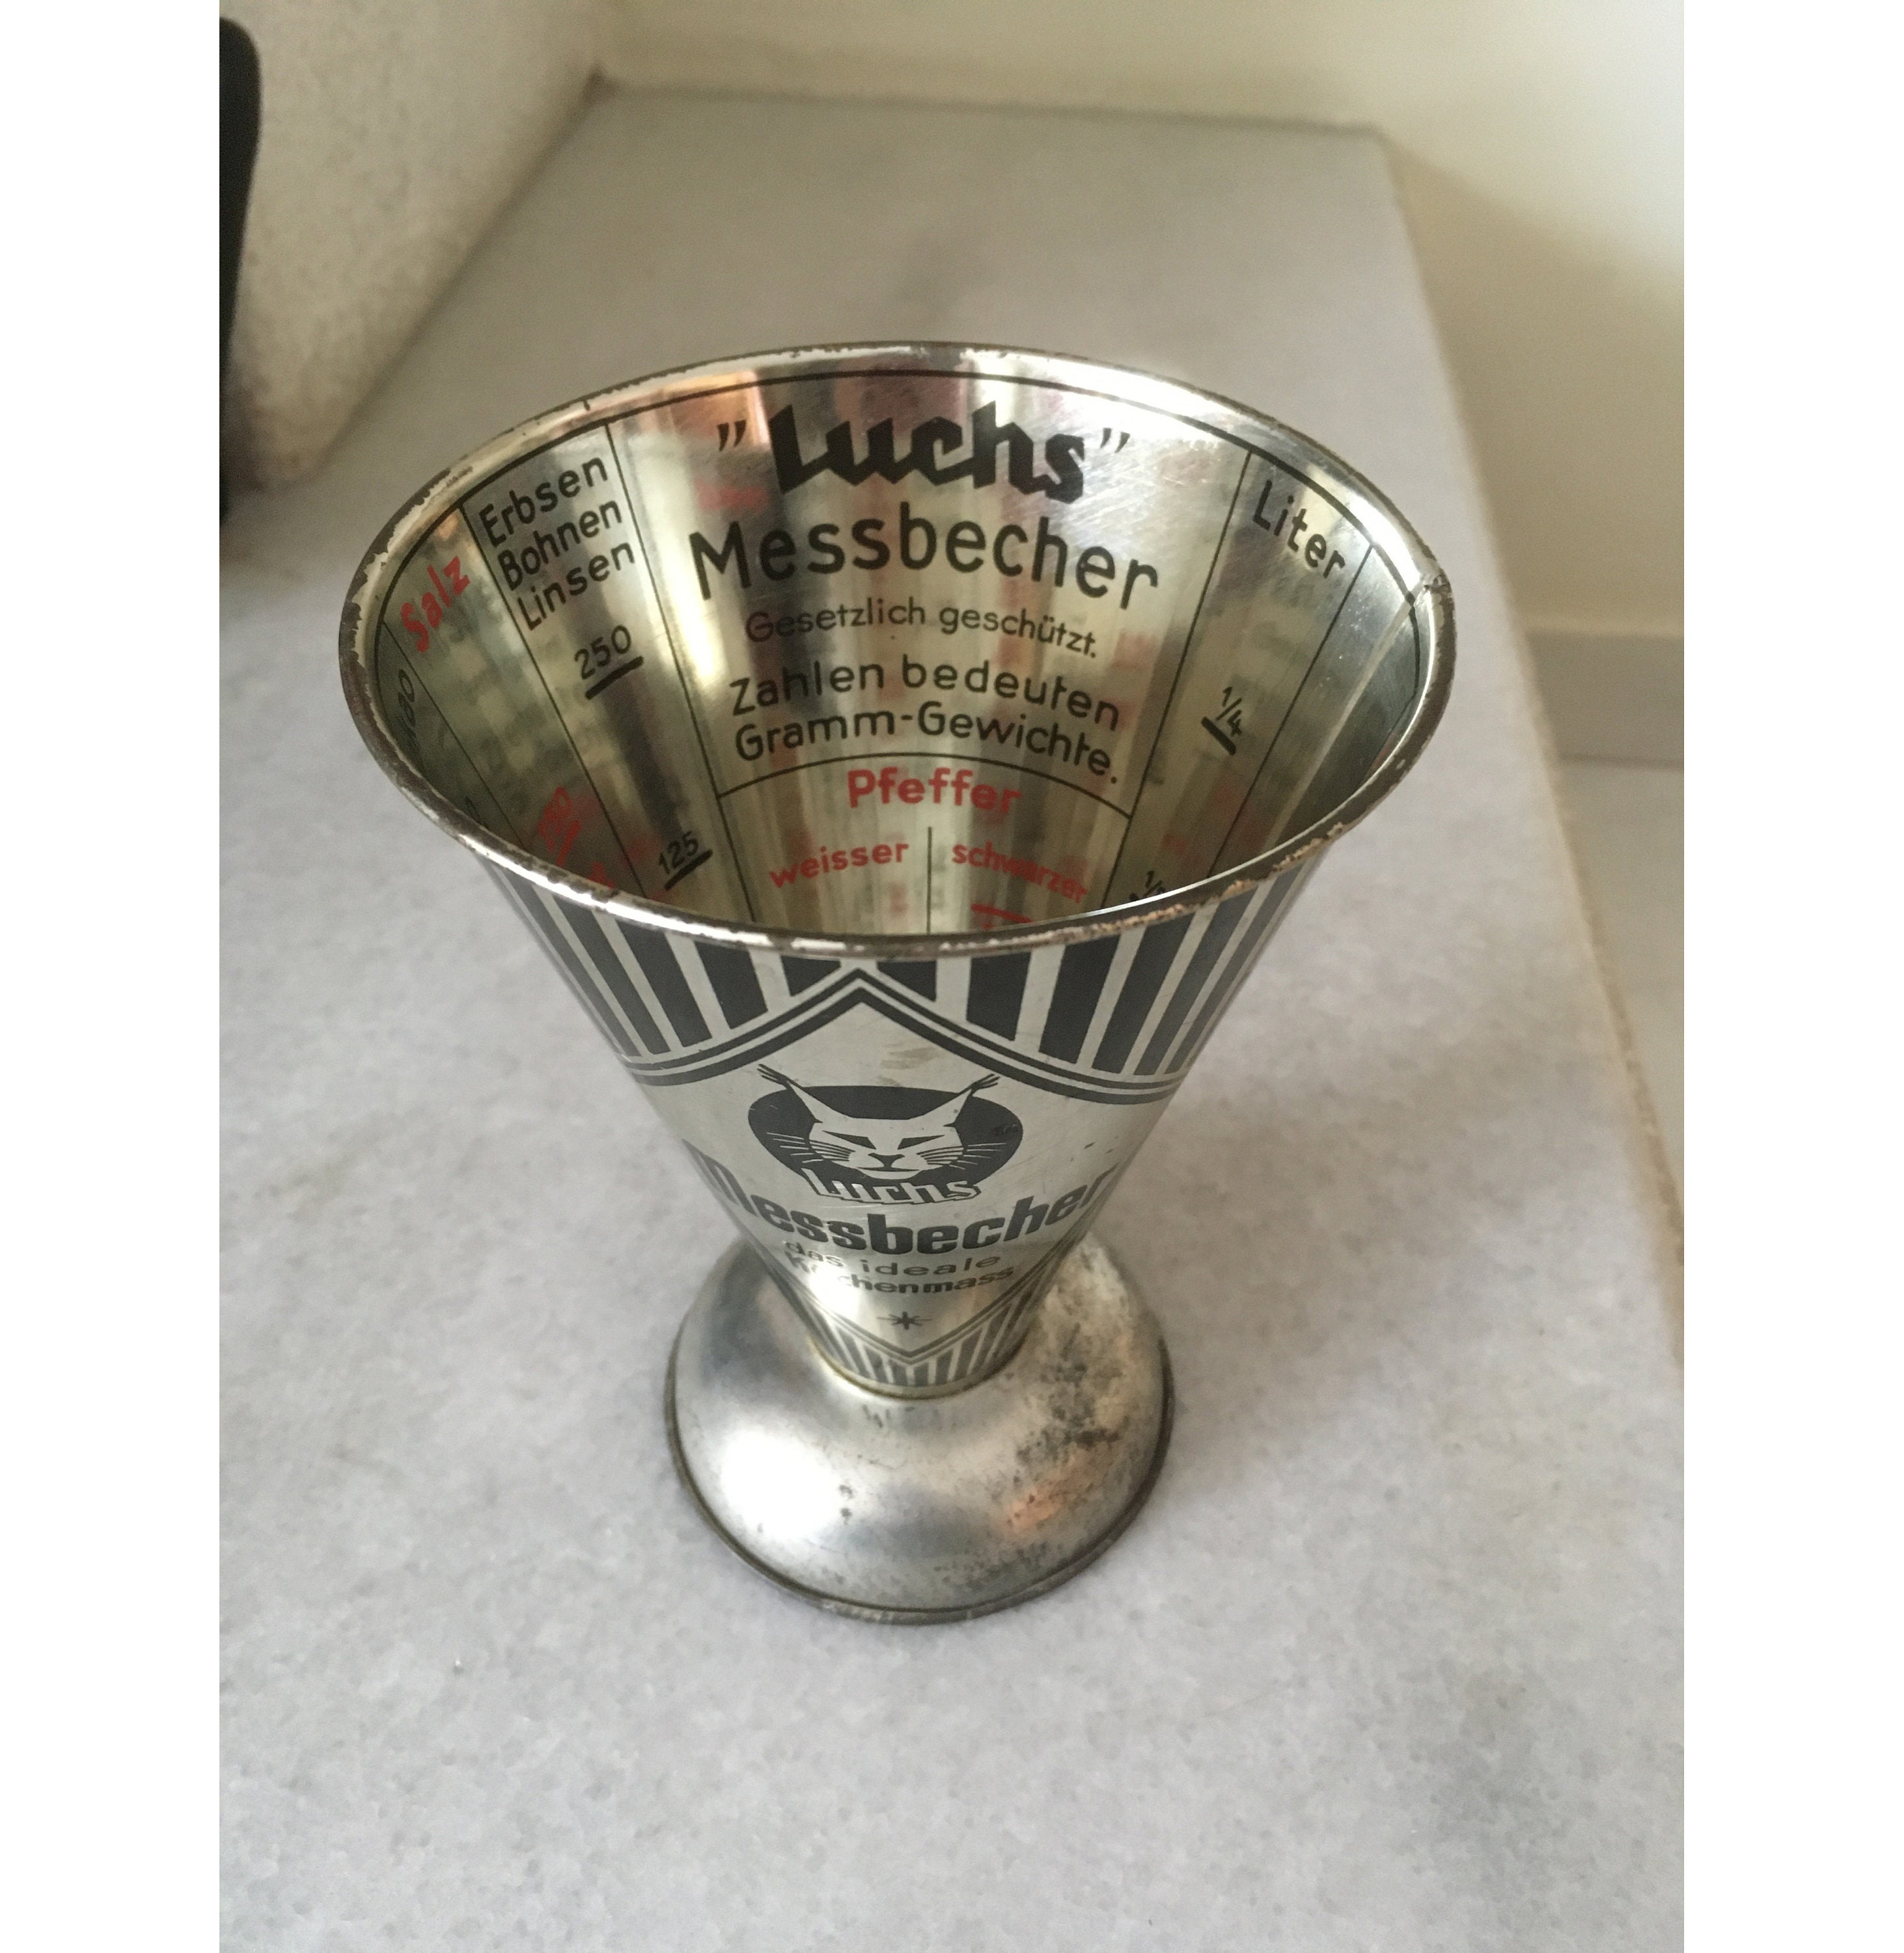 Messbecher Measuring Cup 